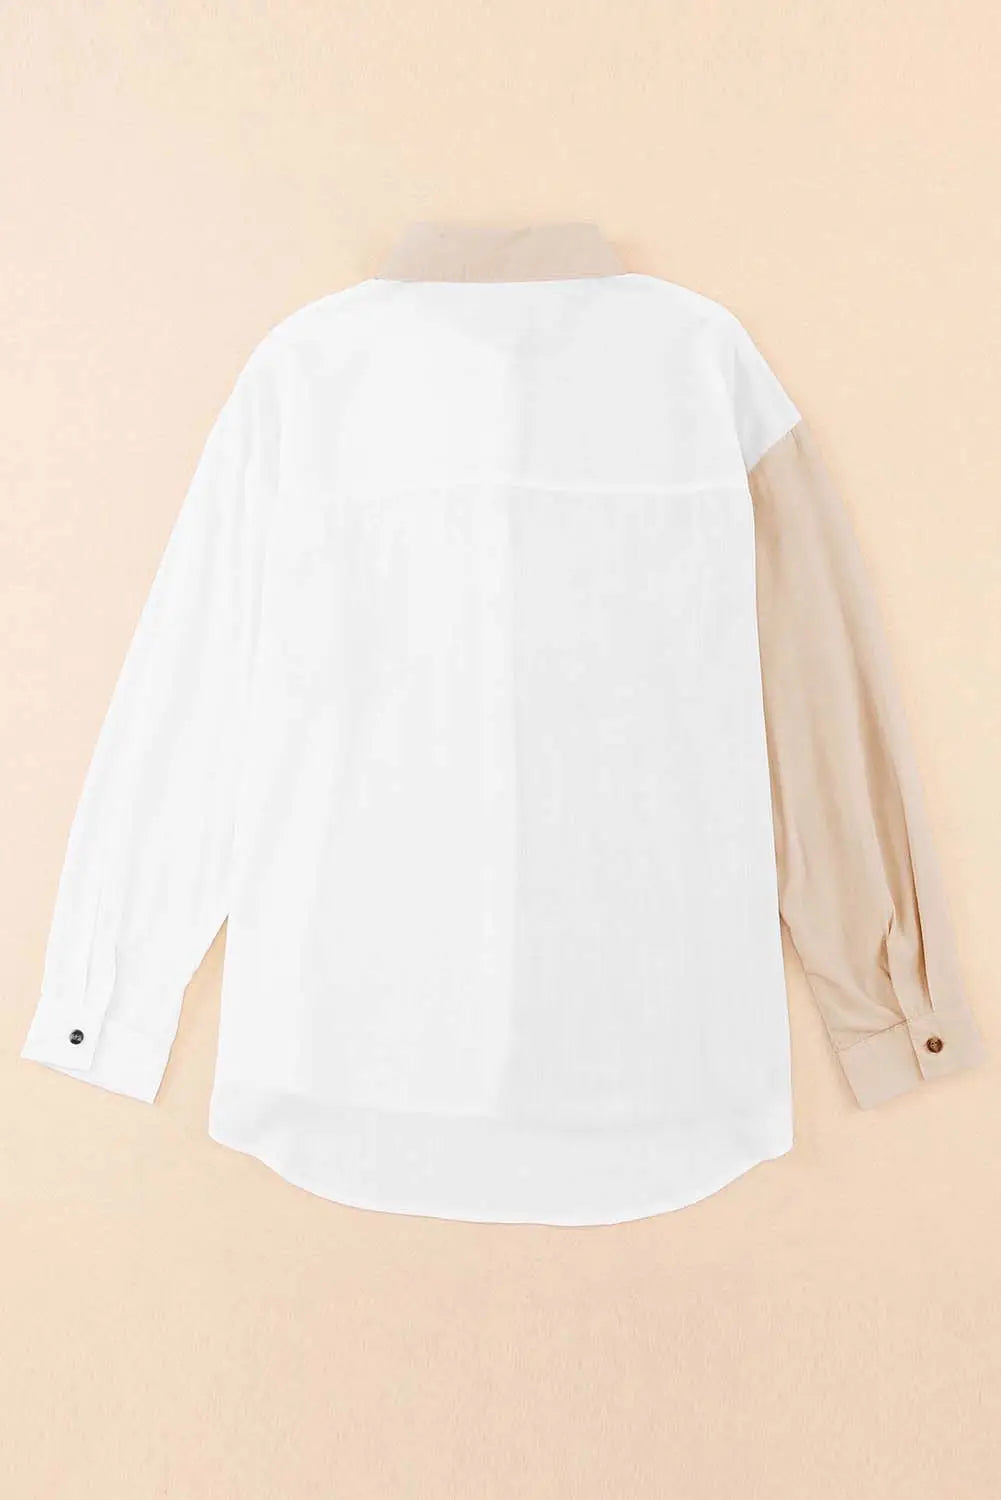 Khaki colorblock buttons shirt-collar long sleeve pocket blouse - tops